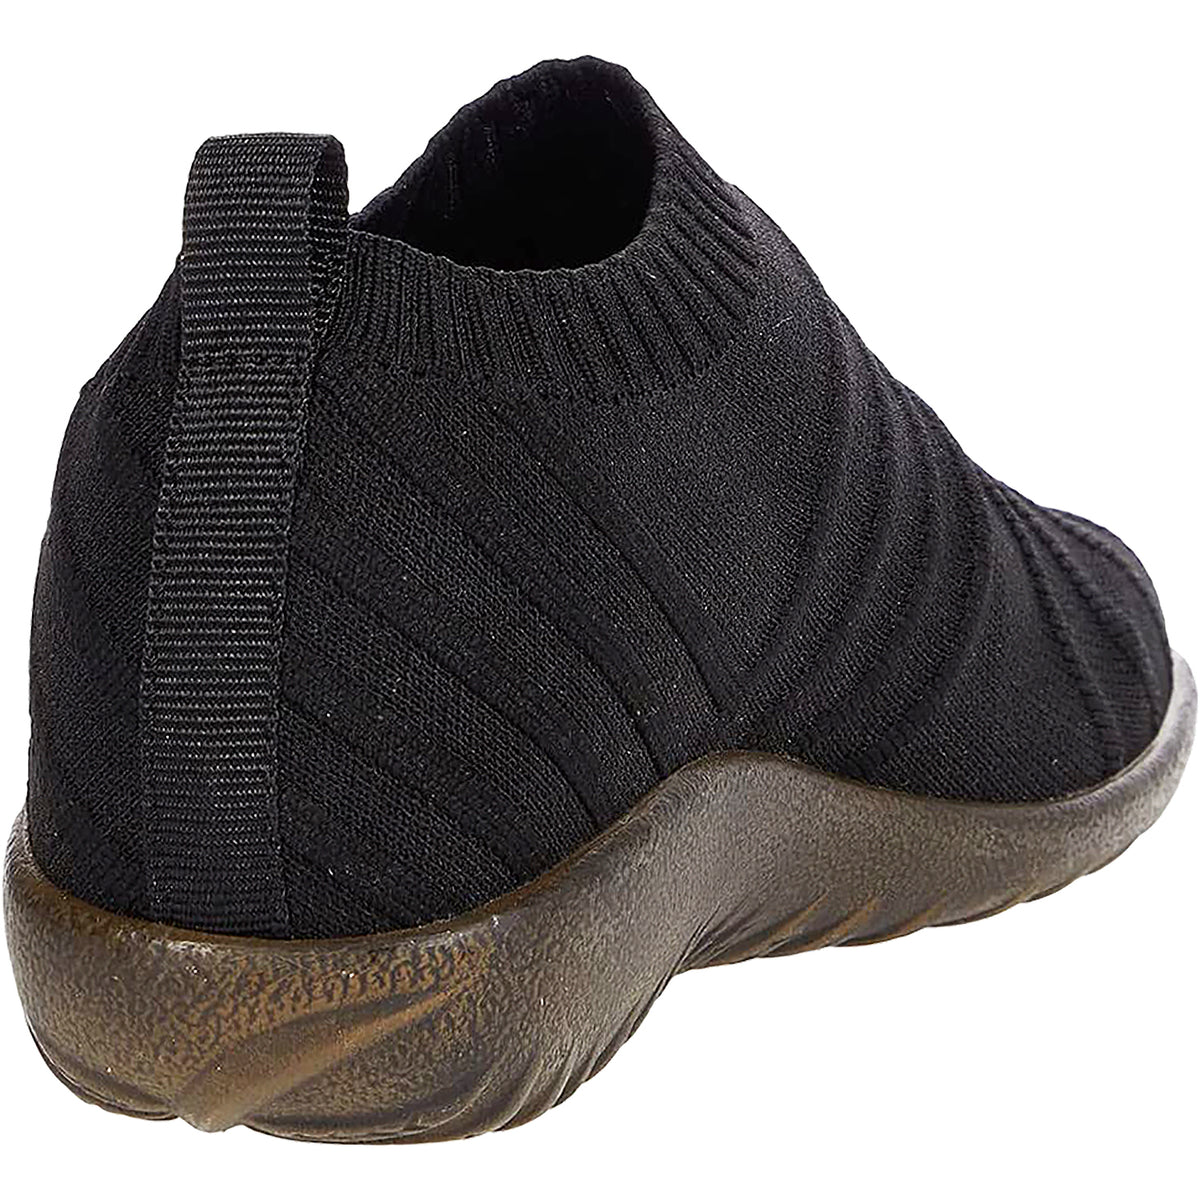 Naot Okahu | Women's Vegan Slip-On Shoes | Footwear etc.